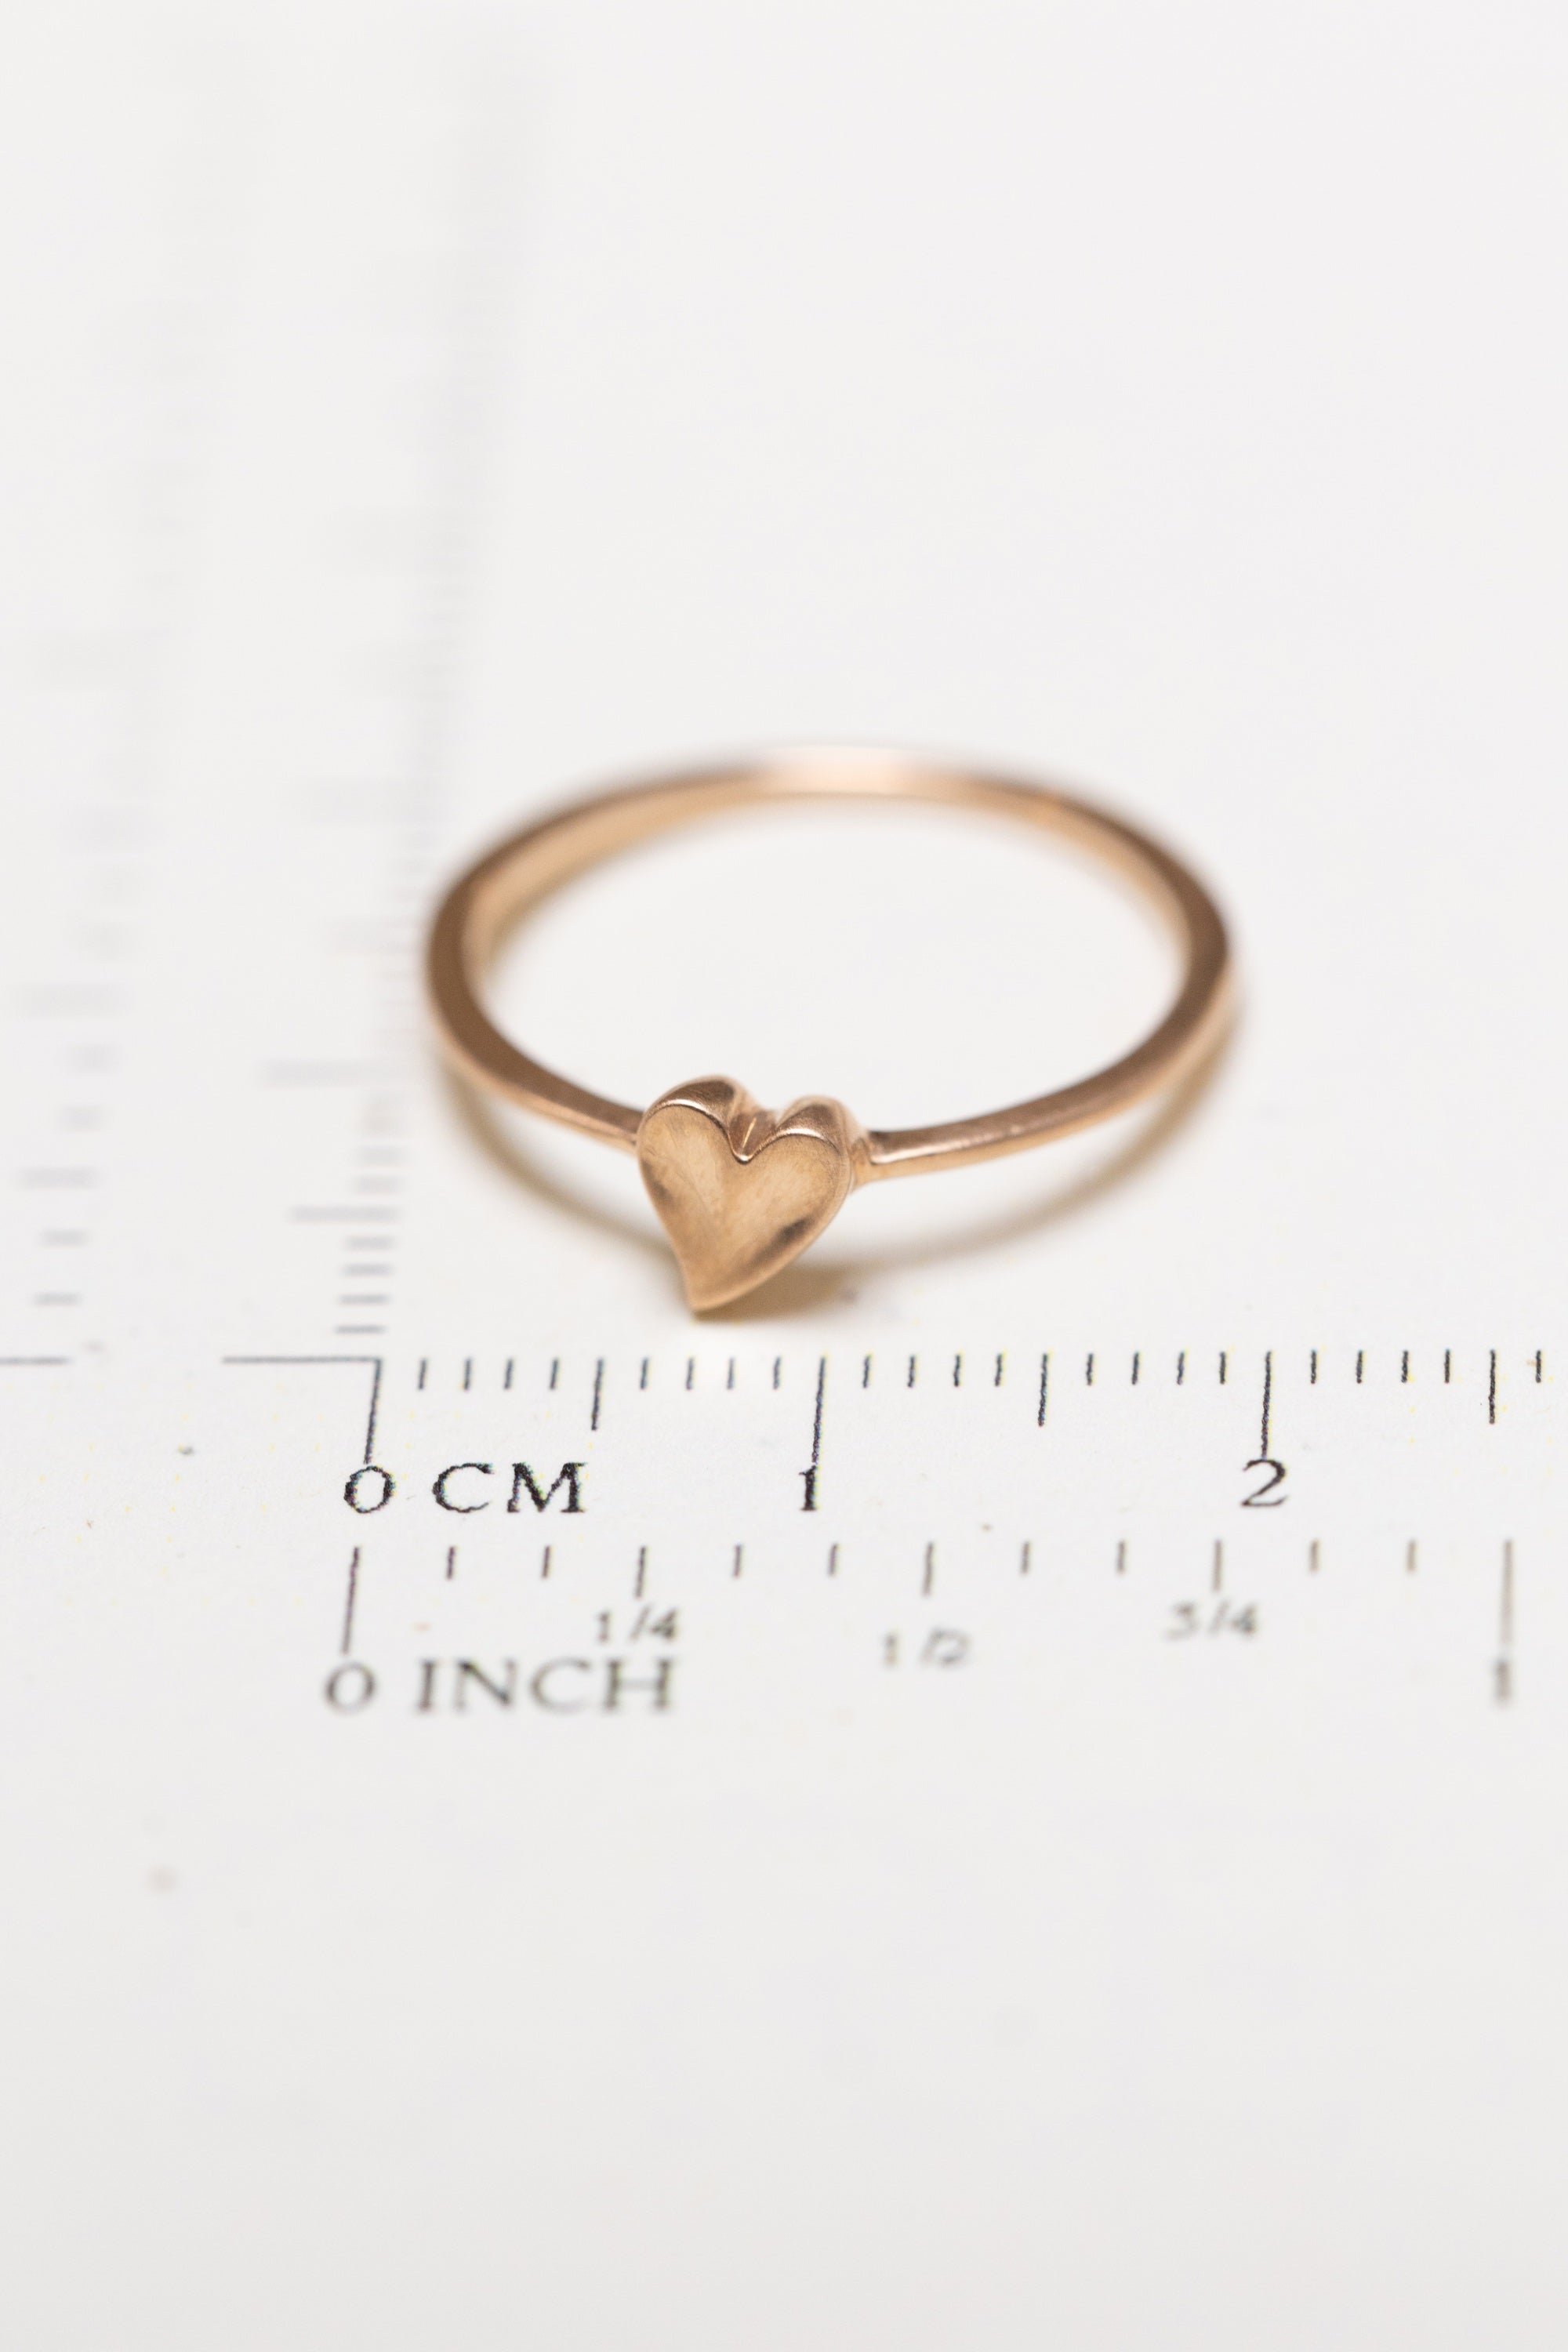 Tiny Heart Ring in Rose Gold (18k)